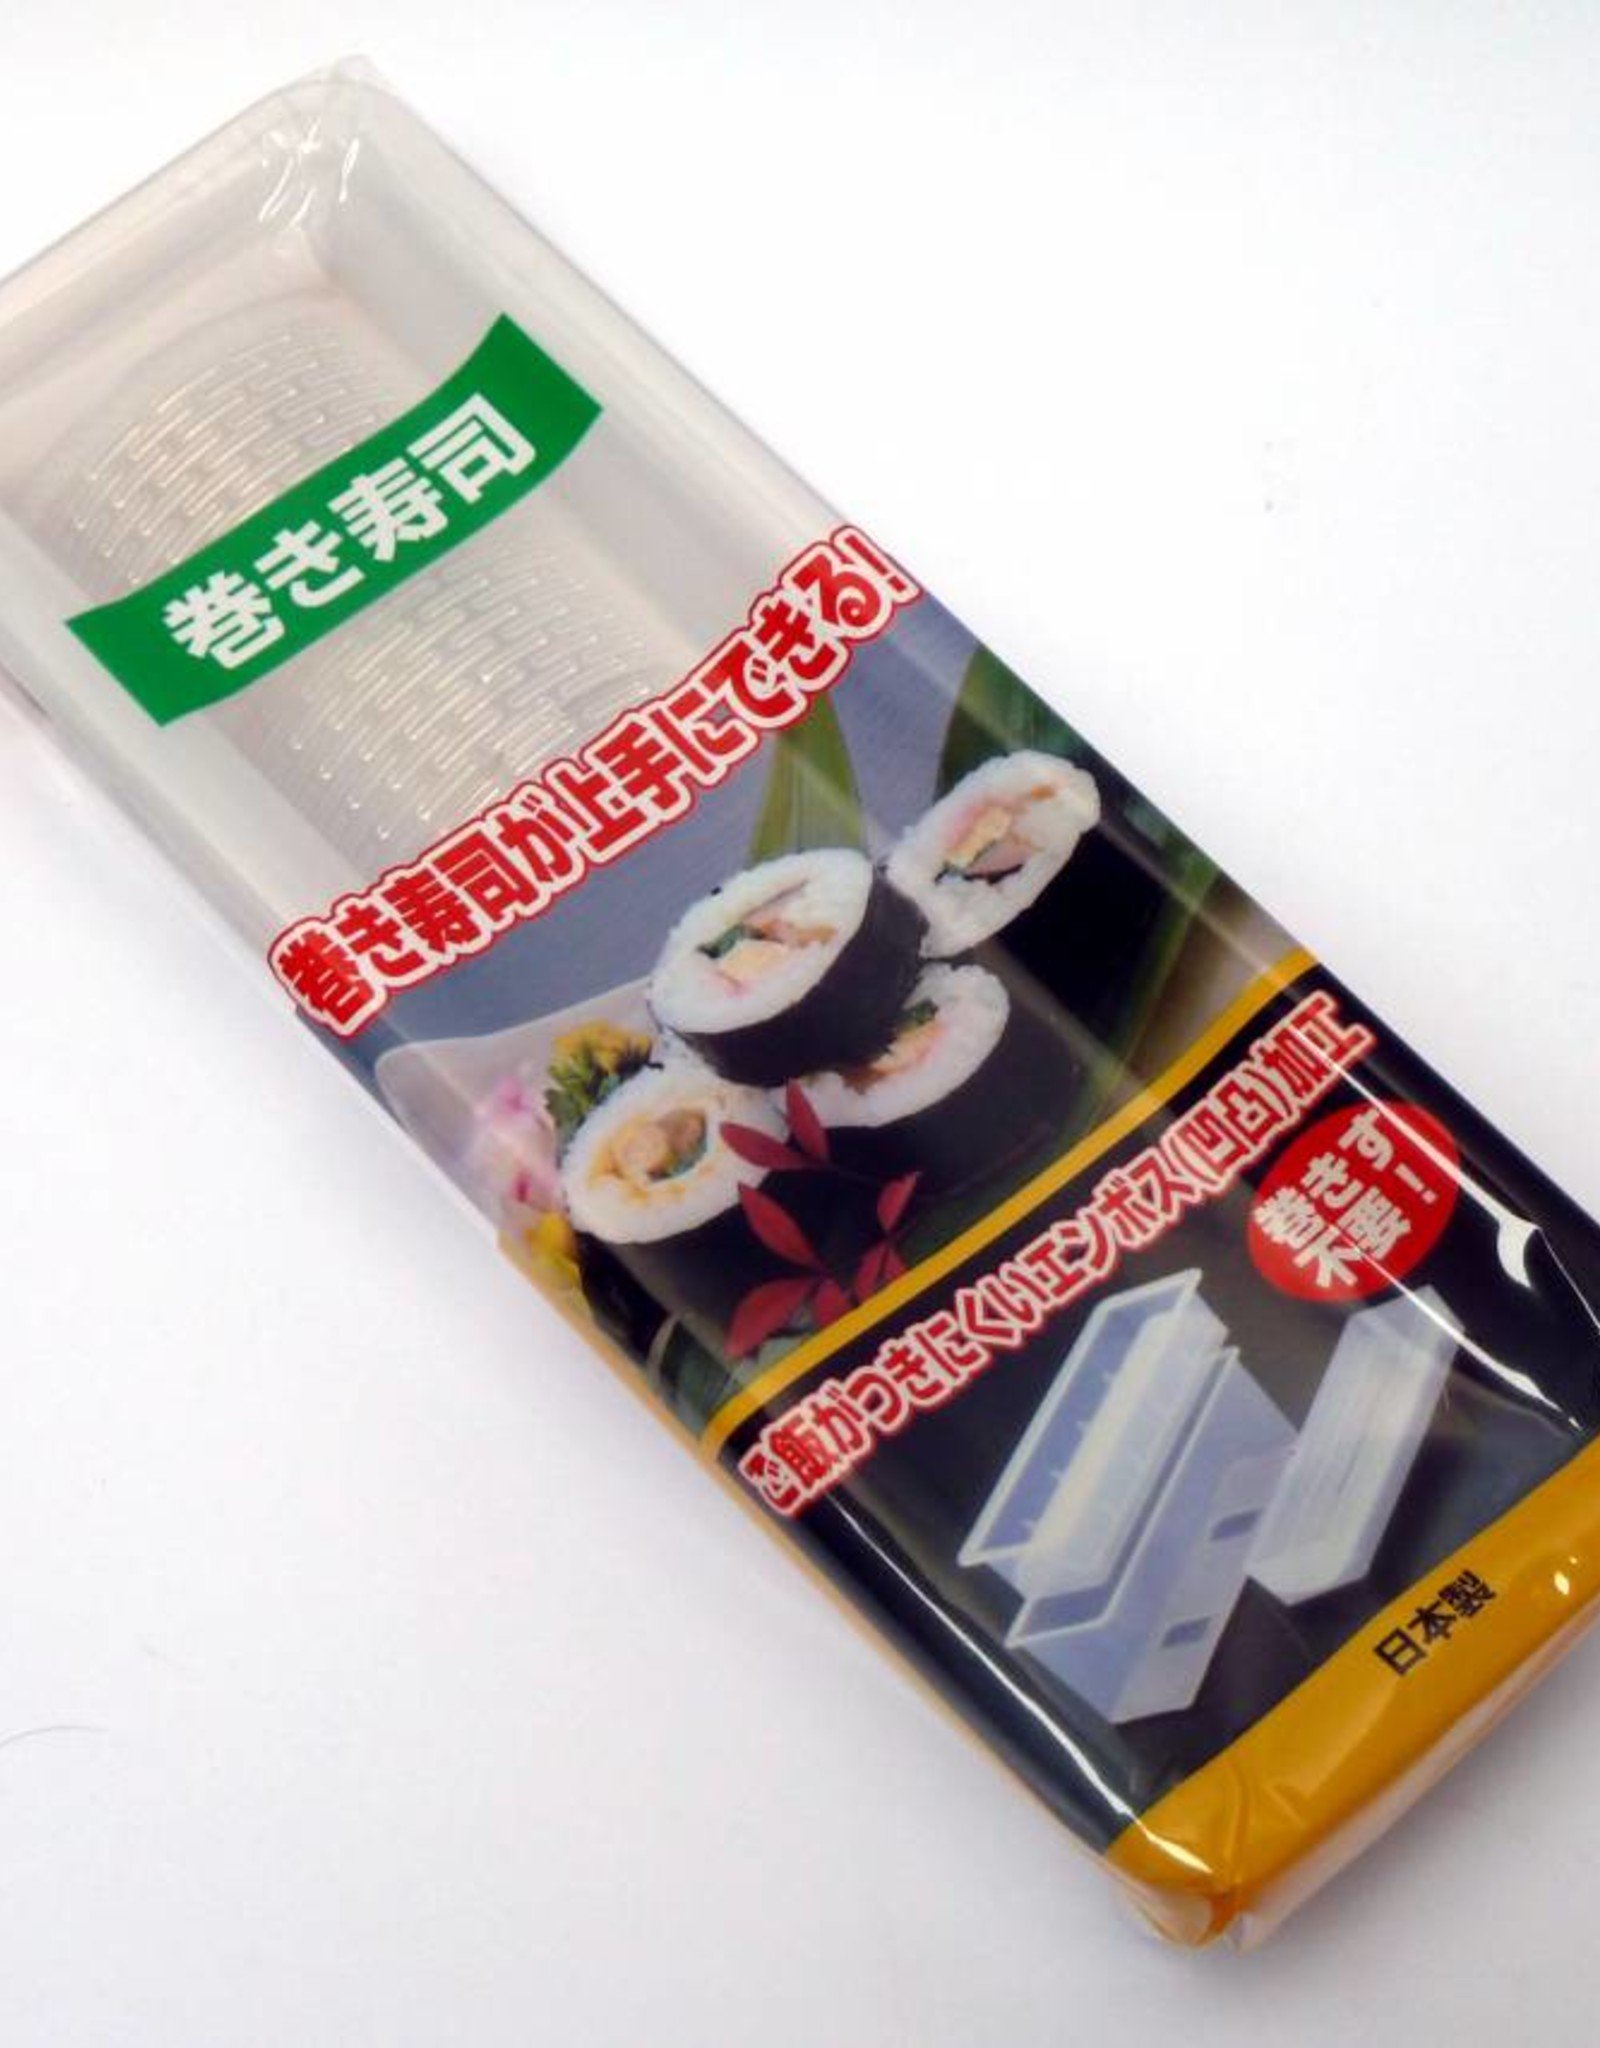 Futomaki sushi form (thick sushi roll)